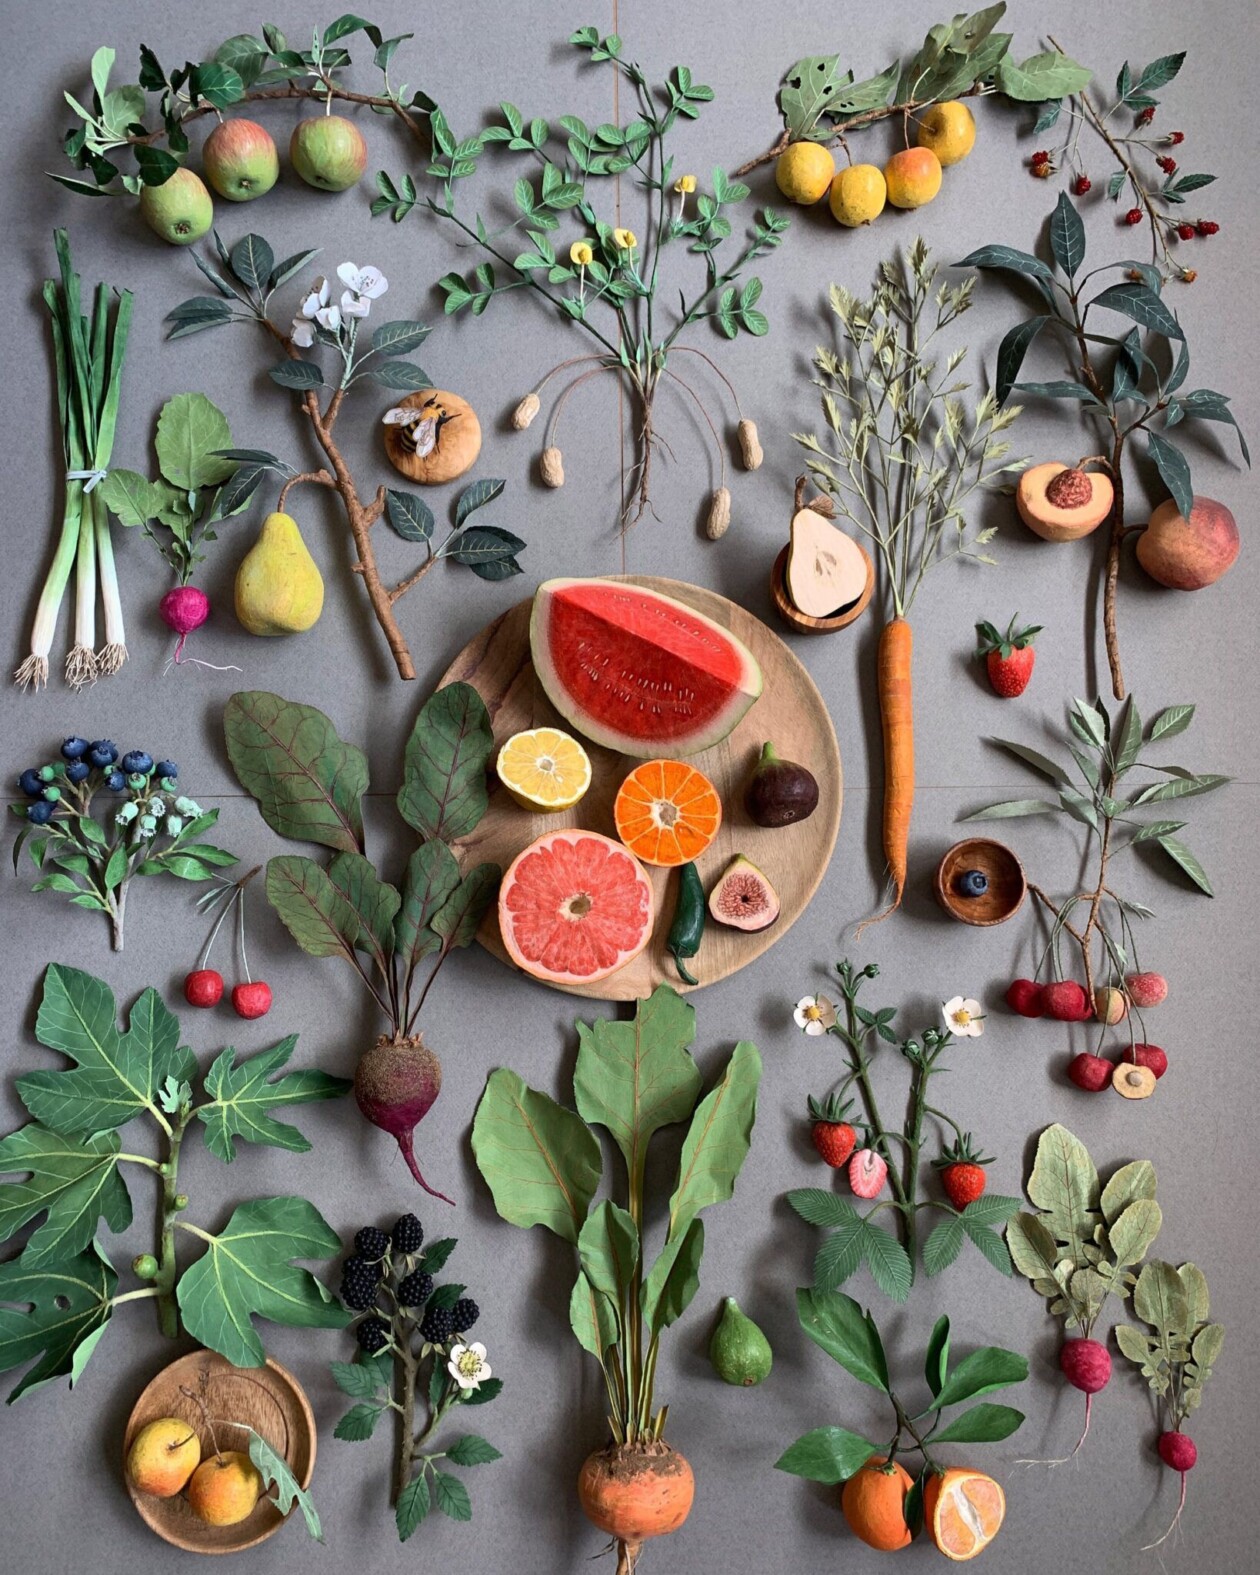 Splendid Lifelike Paper Sculptures Of Animals, Plants, Vegetables, And Mushrooms By ann Wood (9)